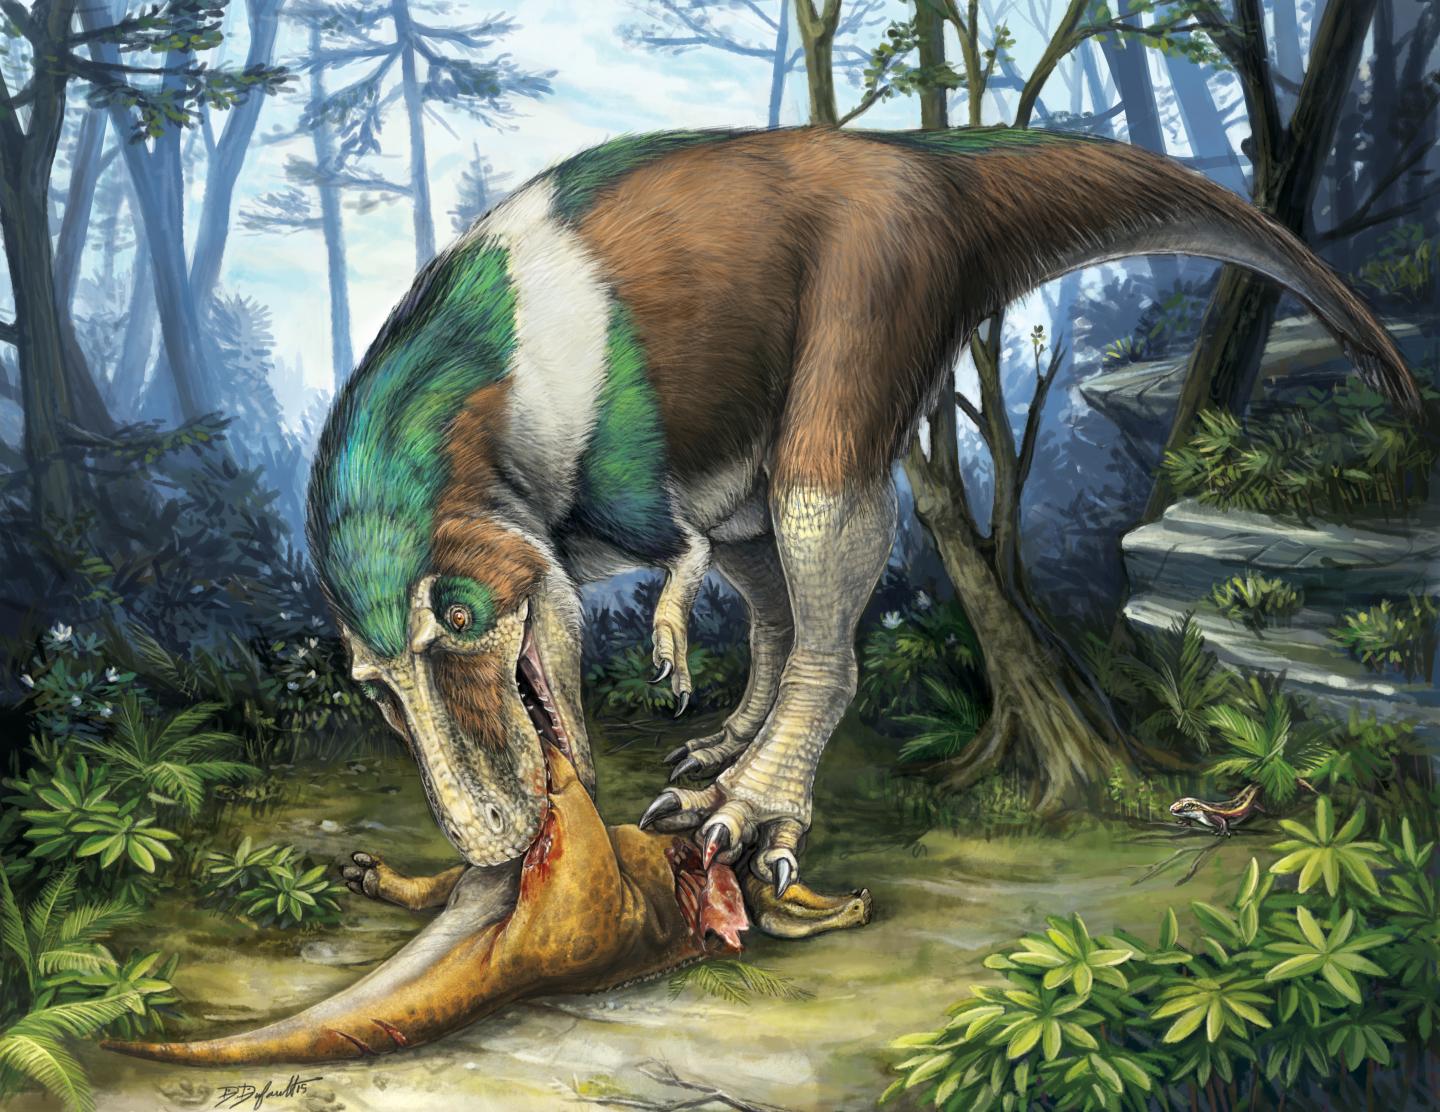 T.Rex teeth were perfect for tearing through flesh and crunching bones